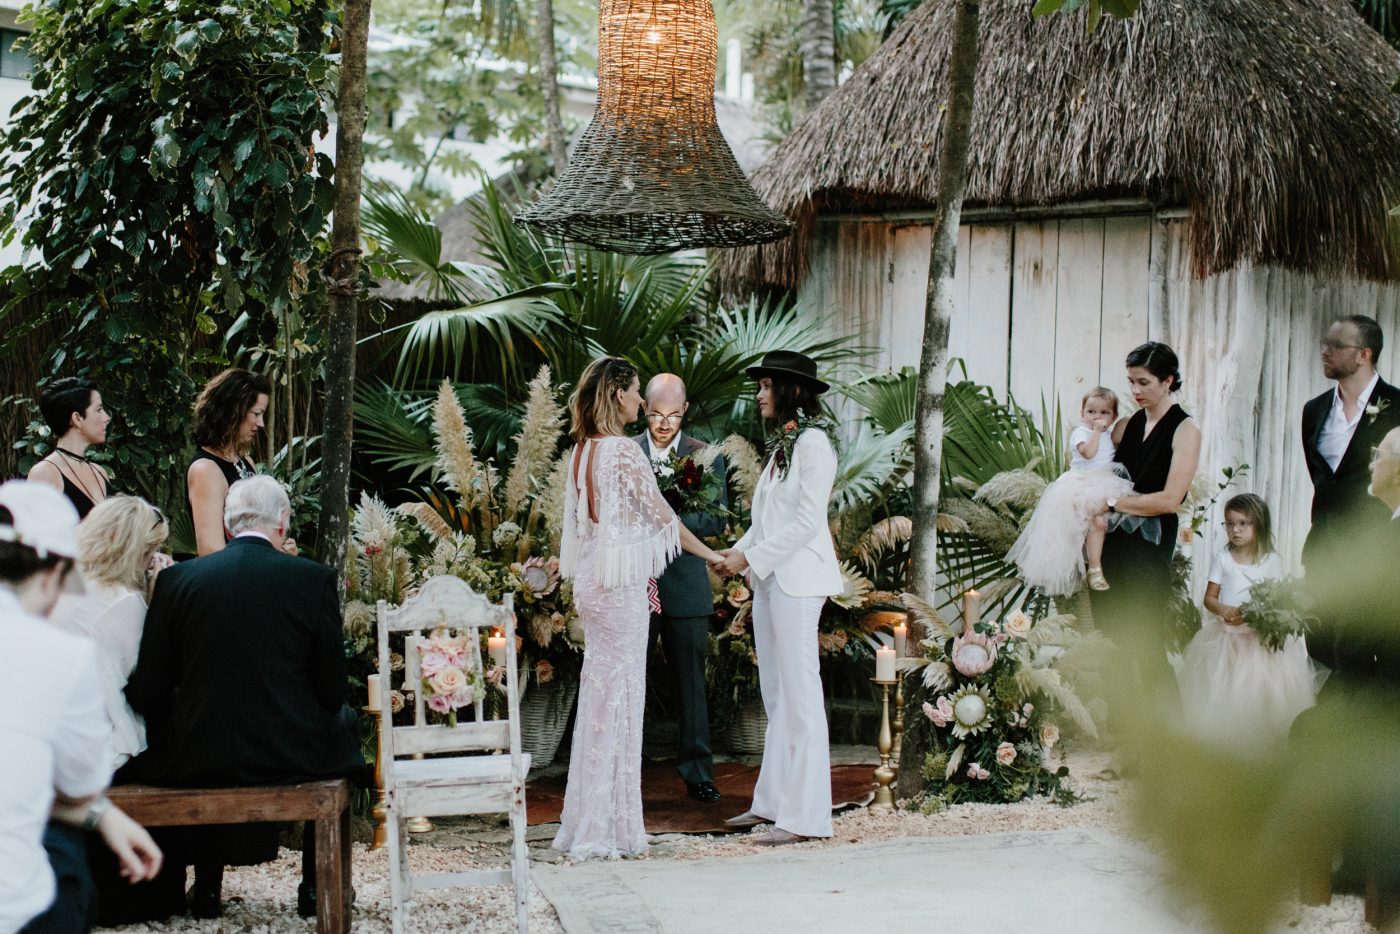 How Eco-Conscious are Destination Wedding Venues?